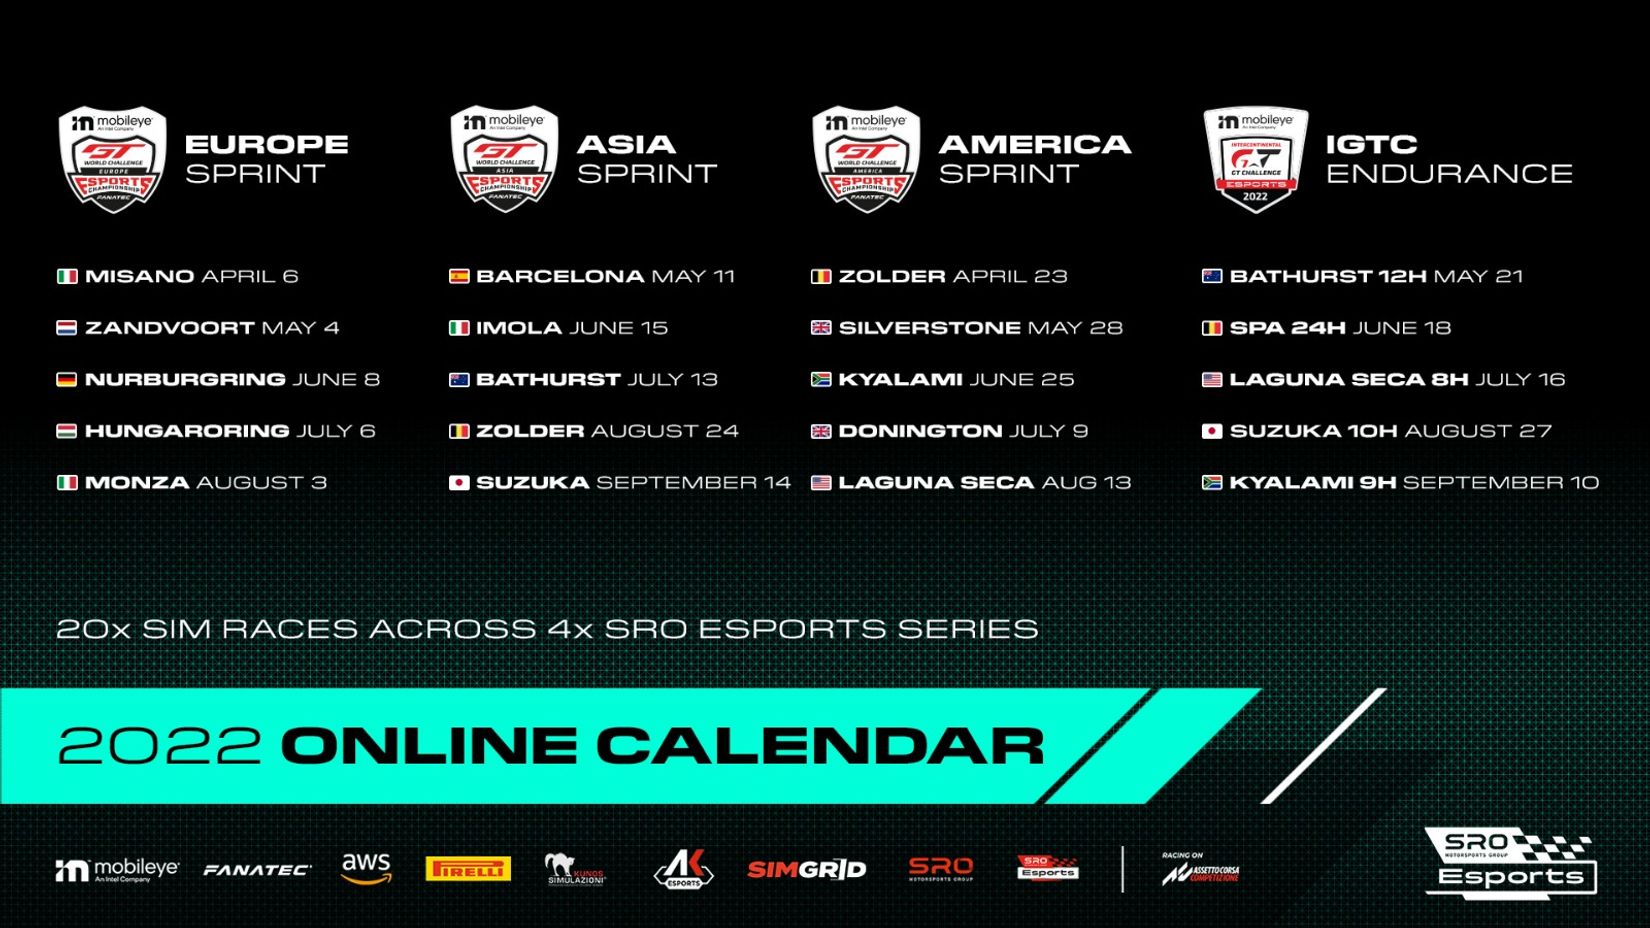 2022 online calendar for Mobileye GT World Challenge Esports Championships